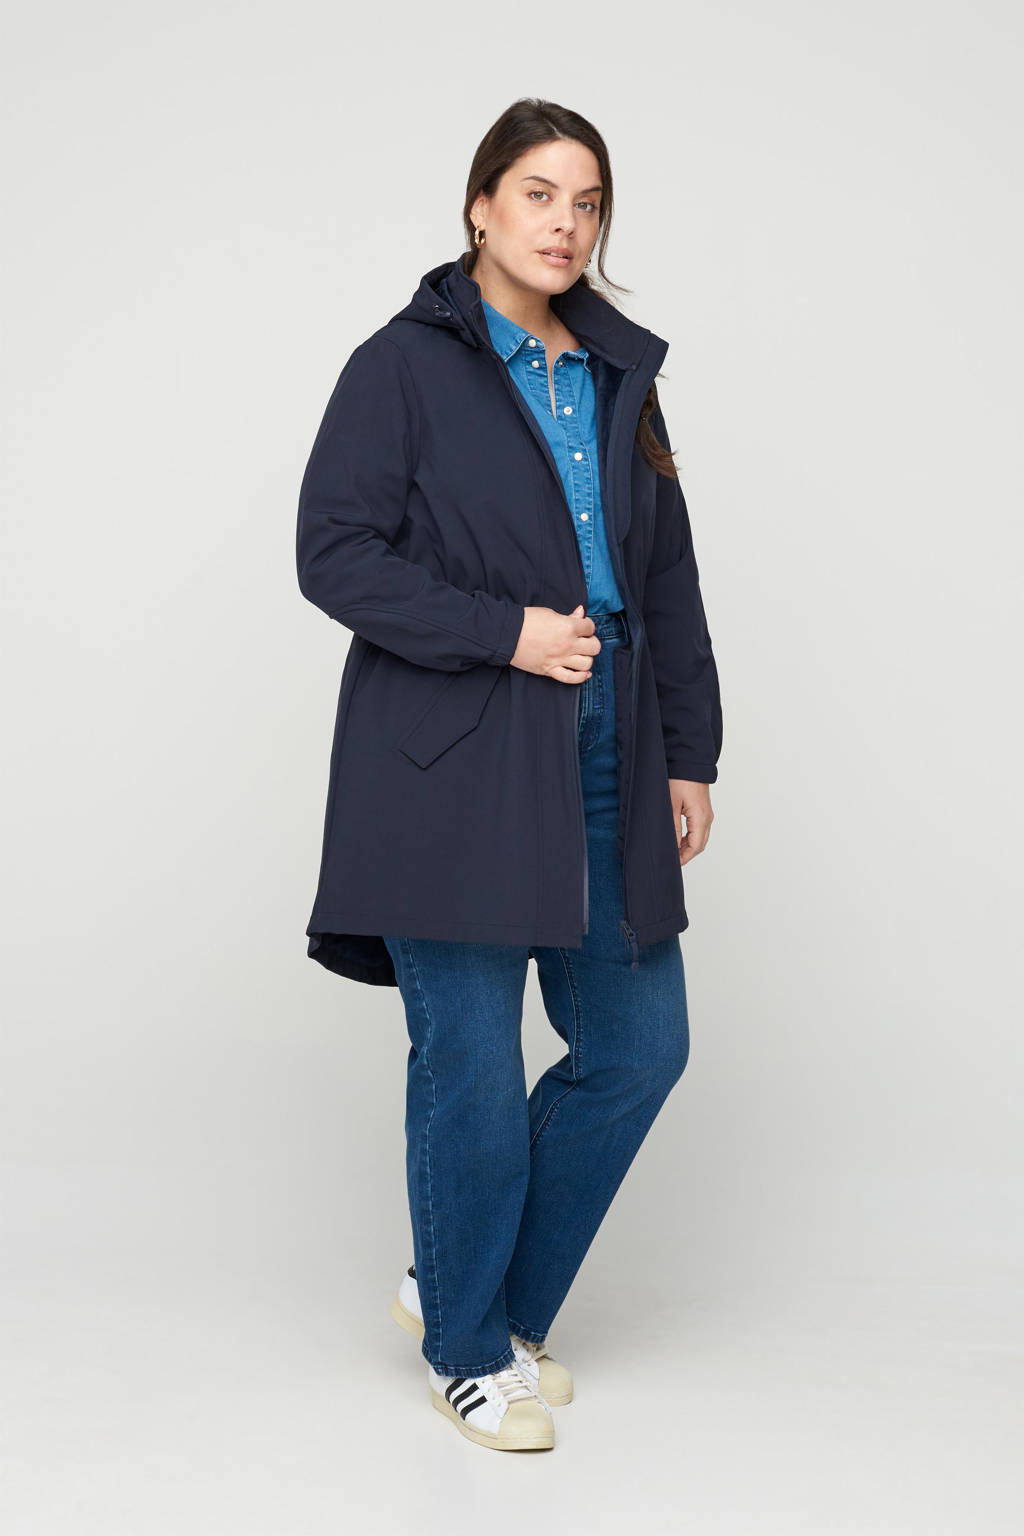 Donkerblauwe dames Zizzi waterafstotende softshell jas van polyester met lange mouwen, capuchon en rits en tunnelkoord